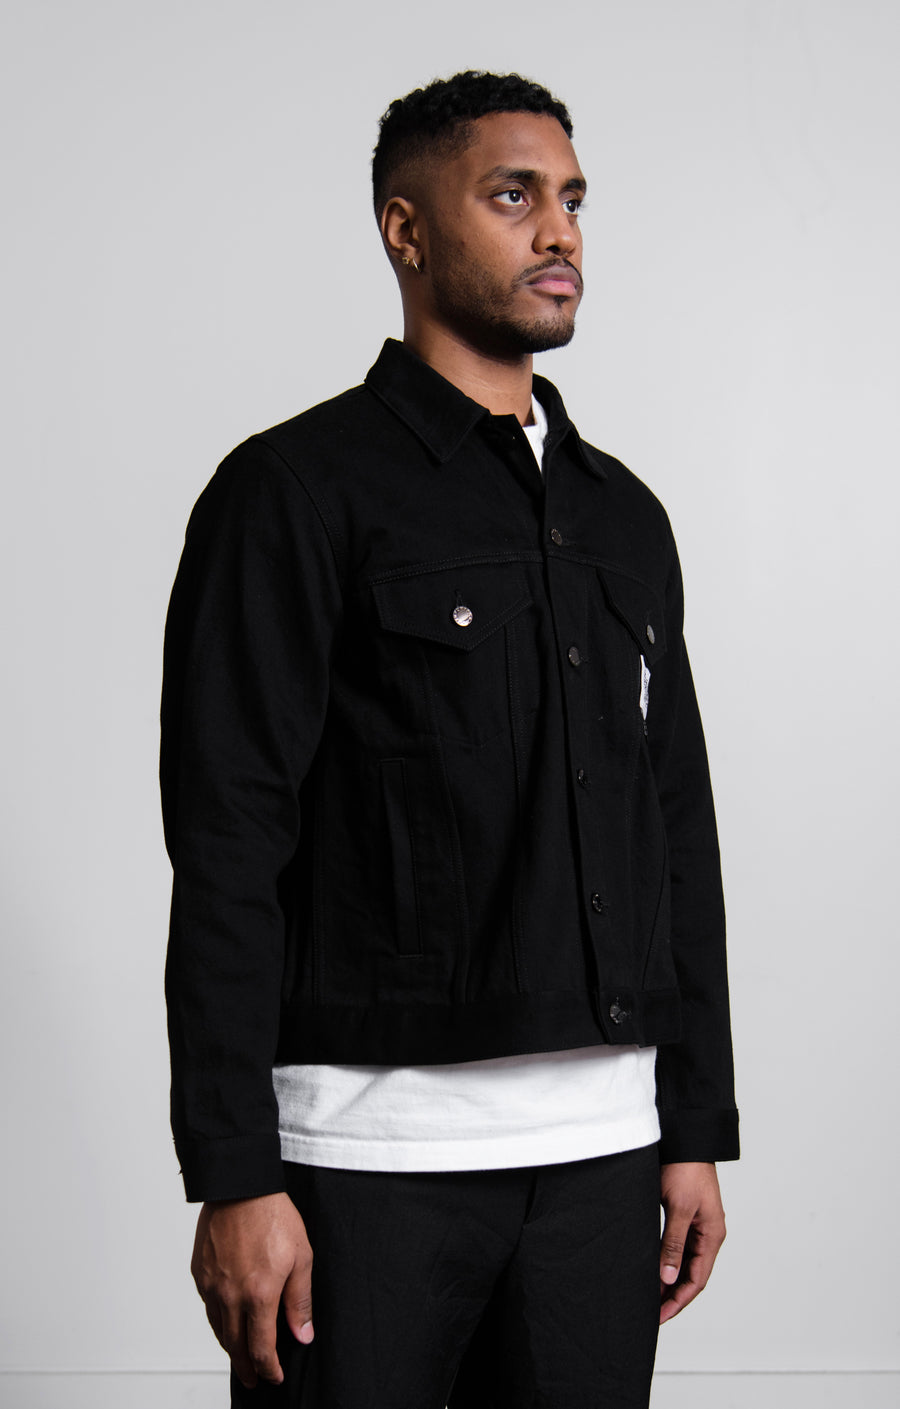 Detachable Collar Denim Jacket Black FU6-BL-01